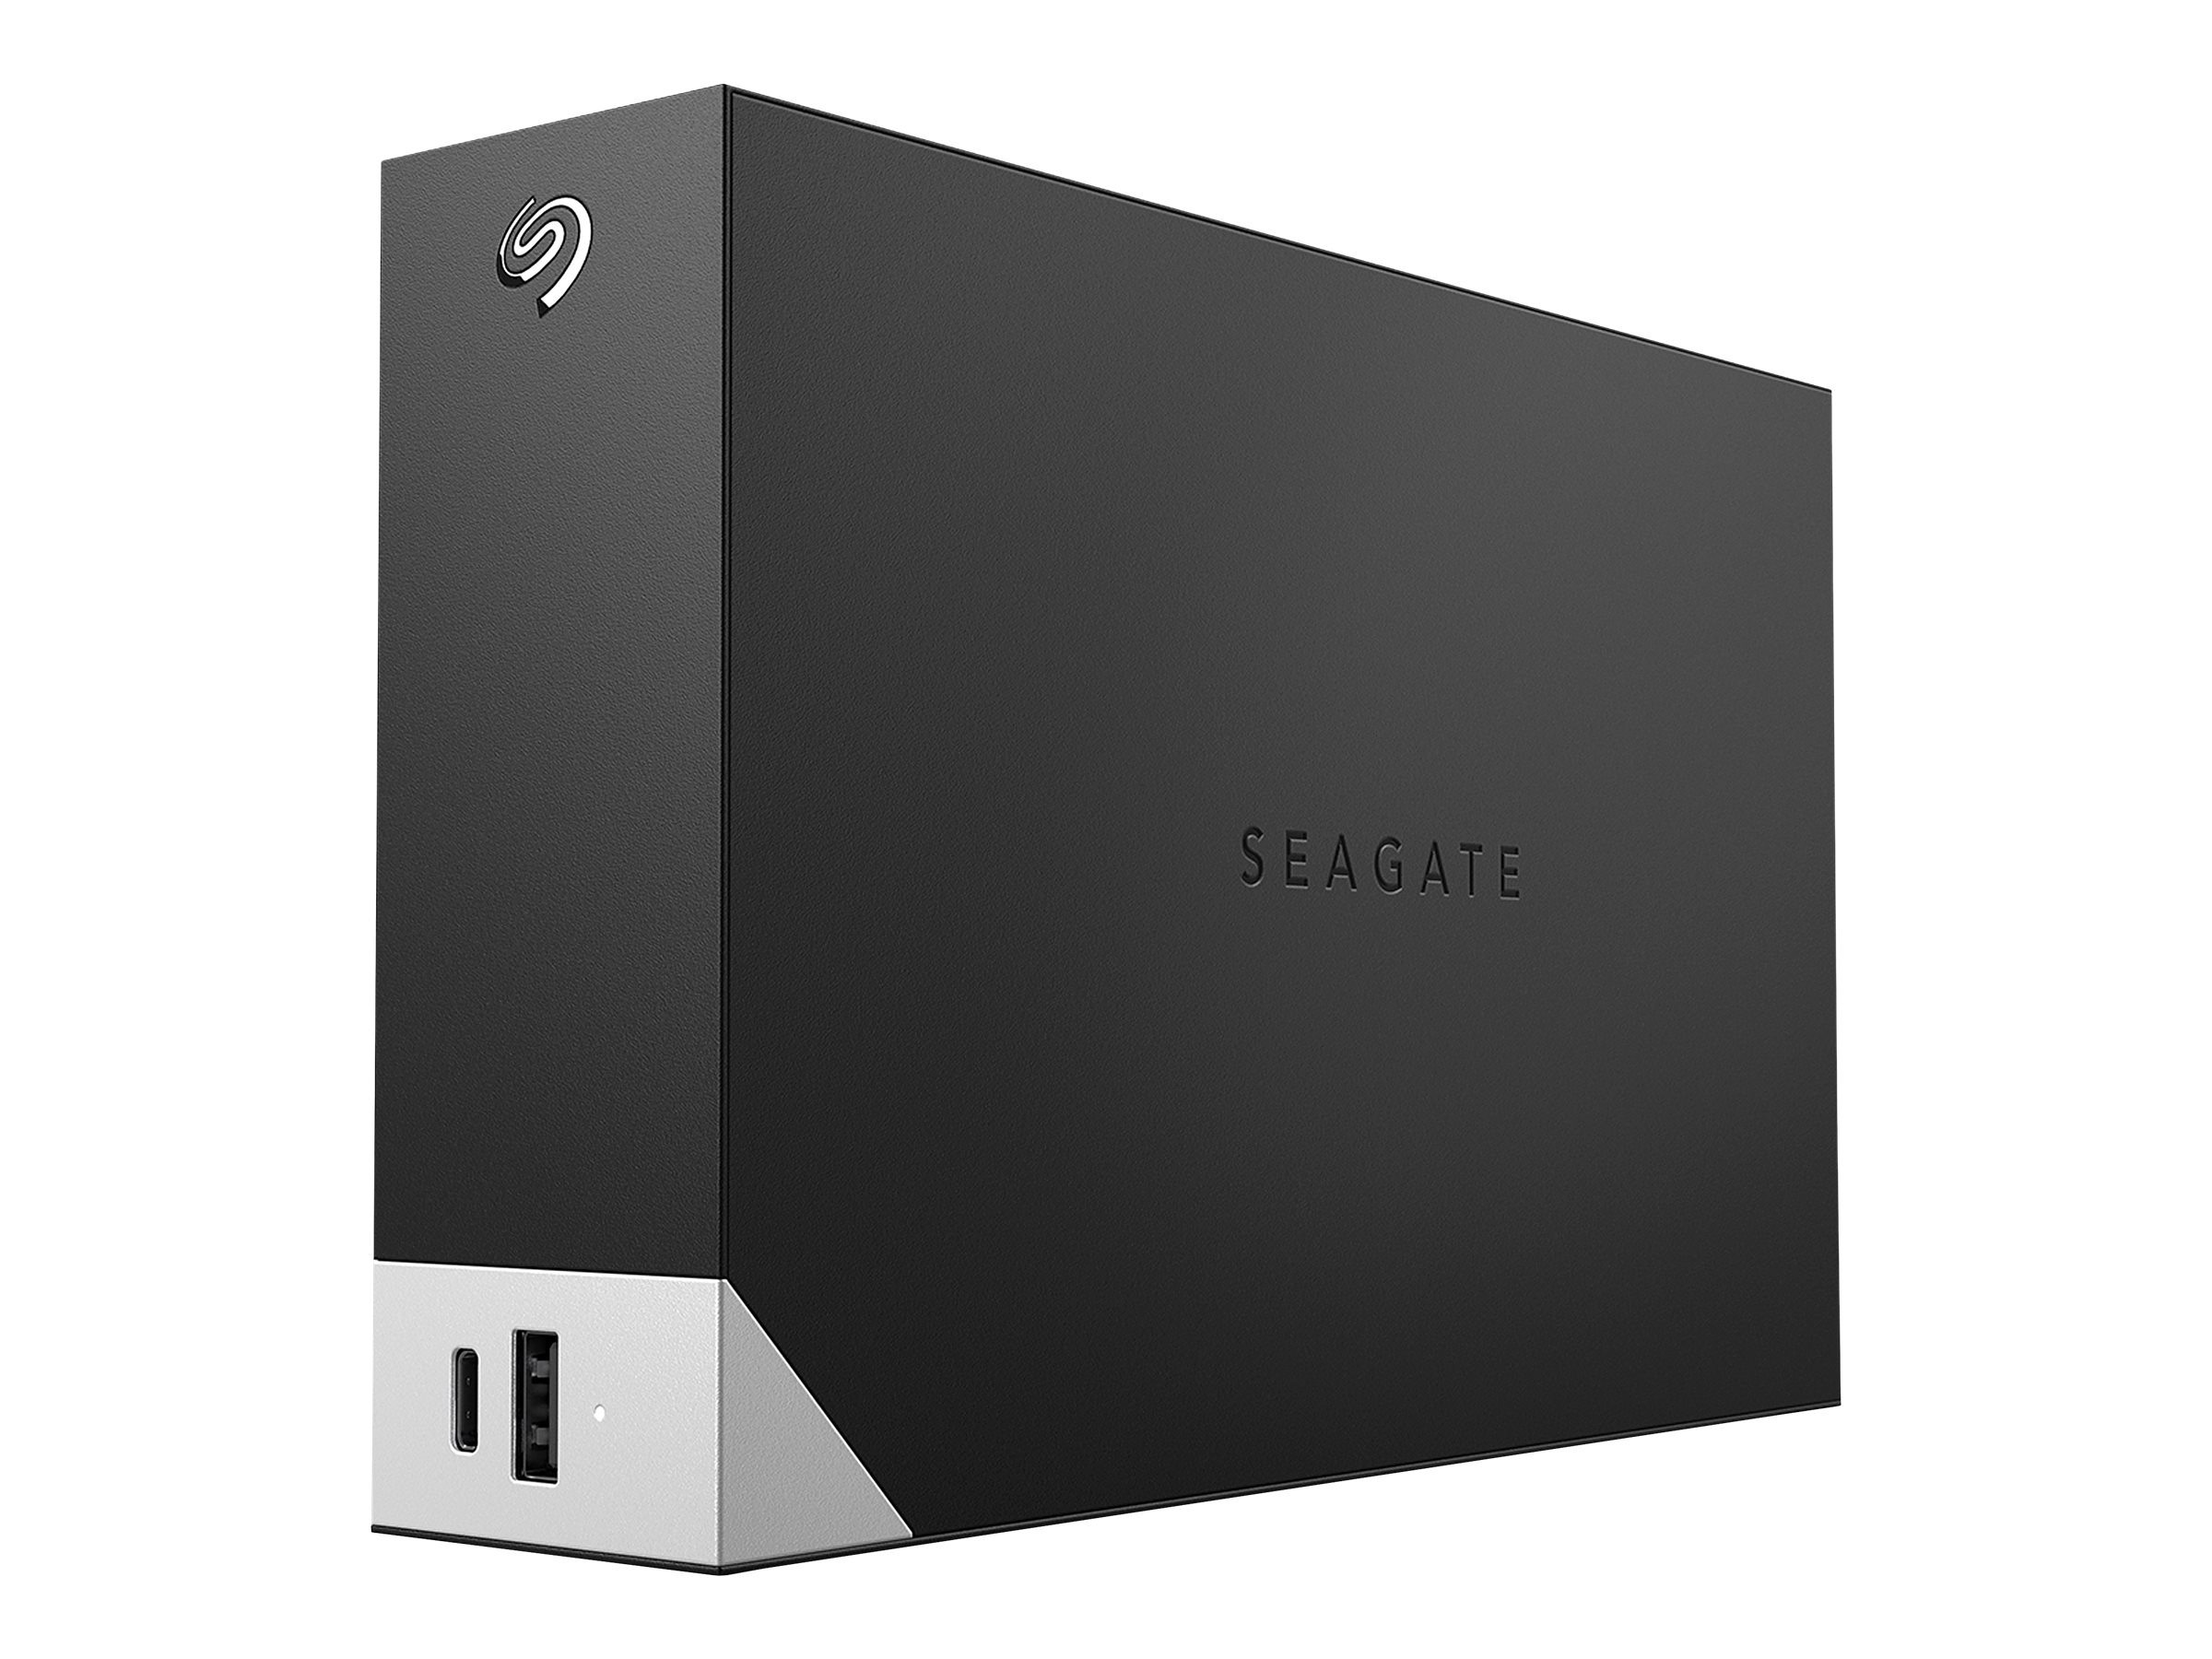 Seagate One Touch with hub STLC4000400 - Festplatte - 4 TB - extern (Stationr) - USB 3.0 - Schwarz